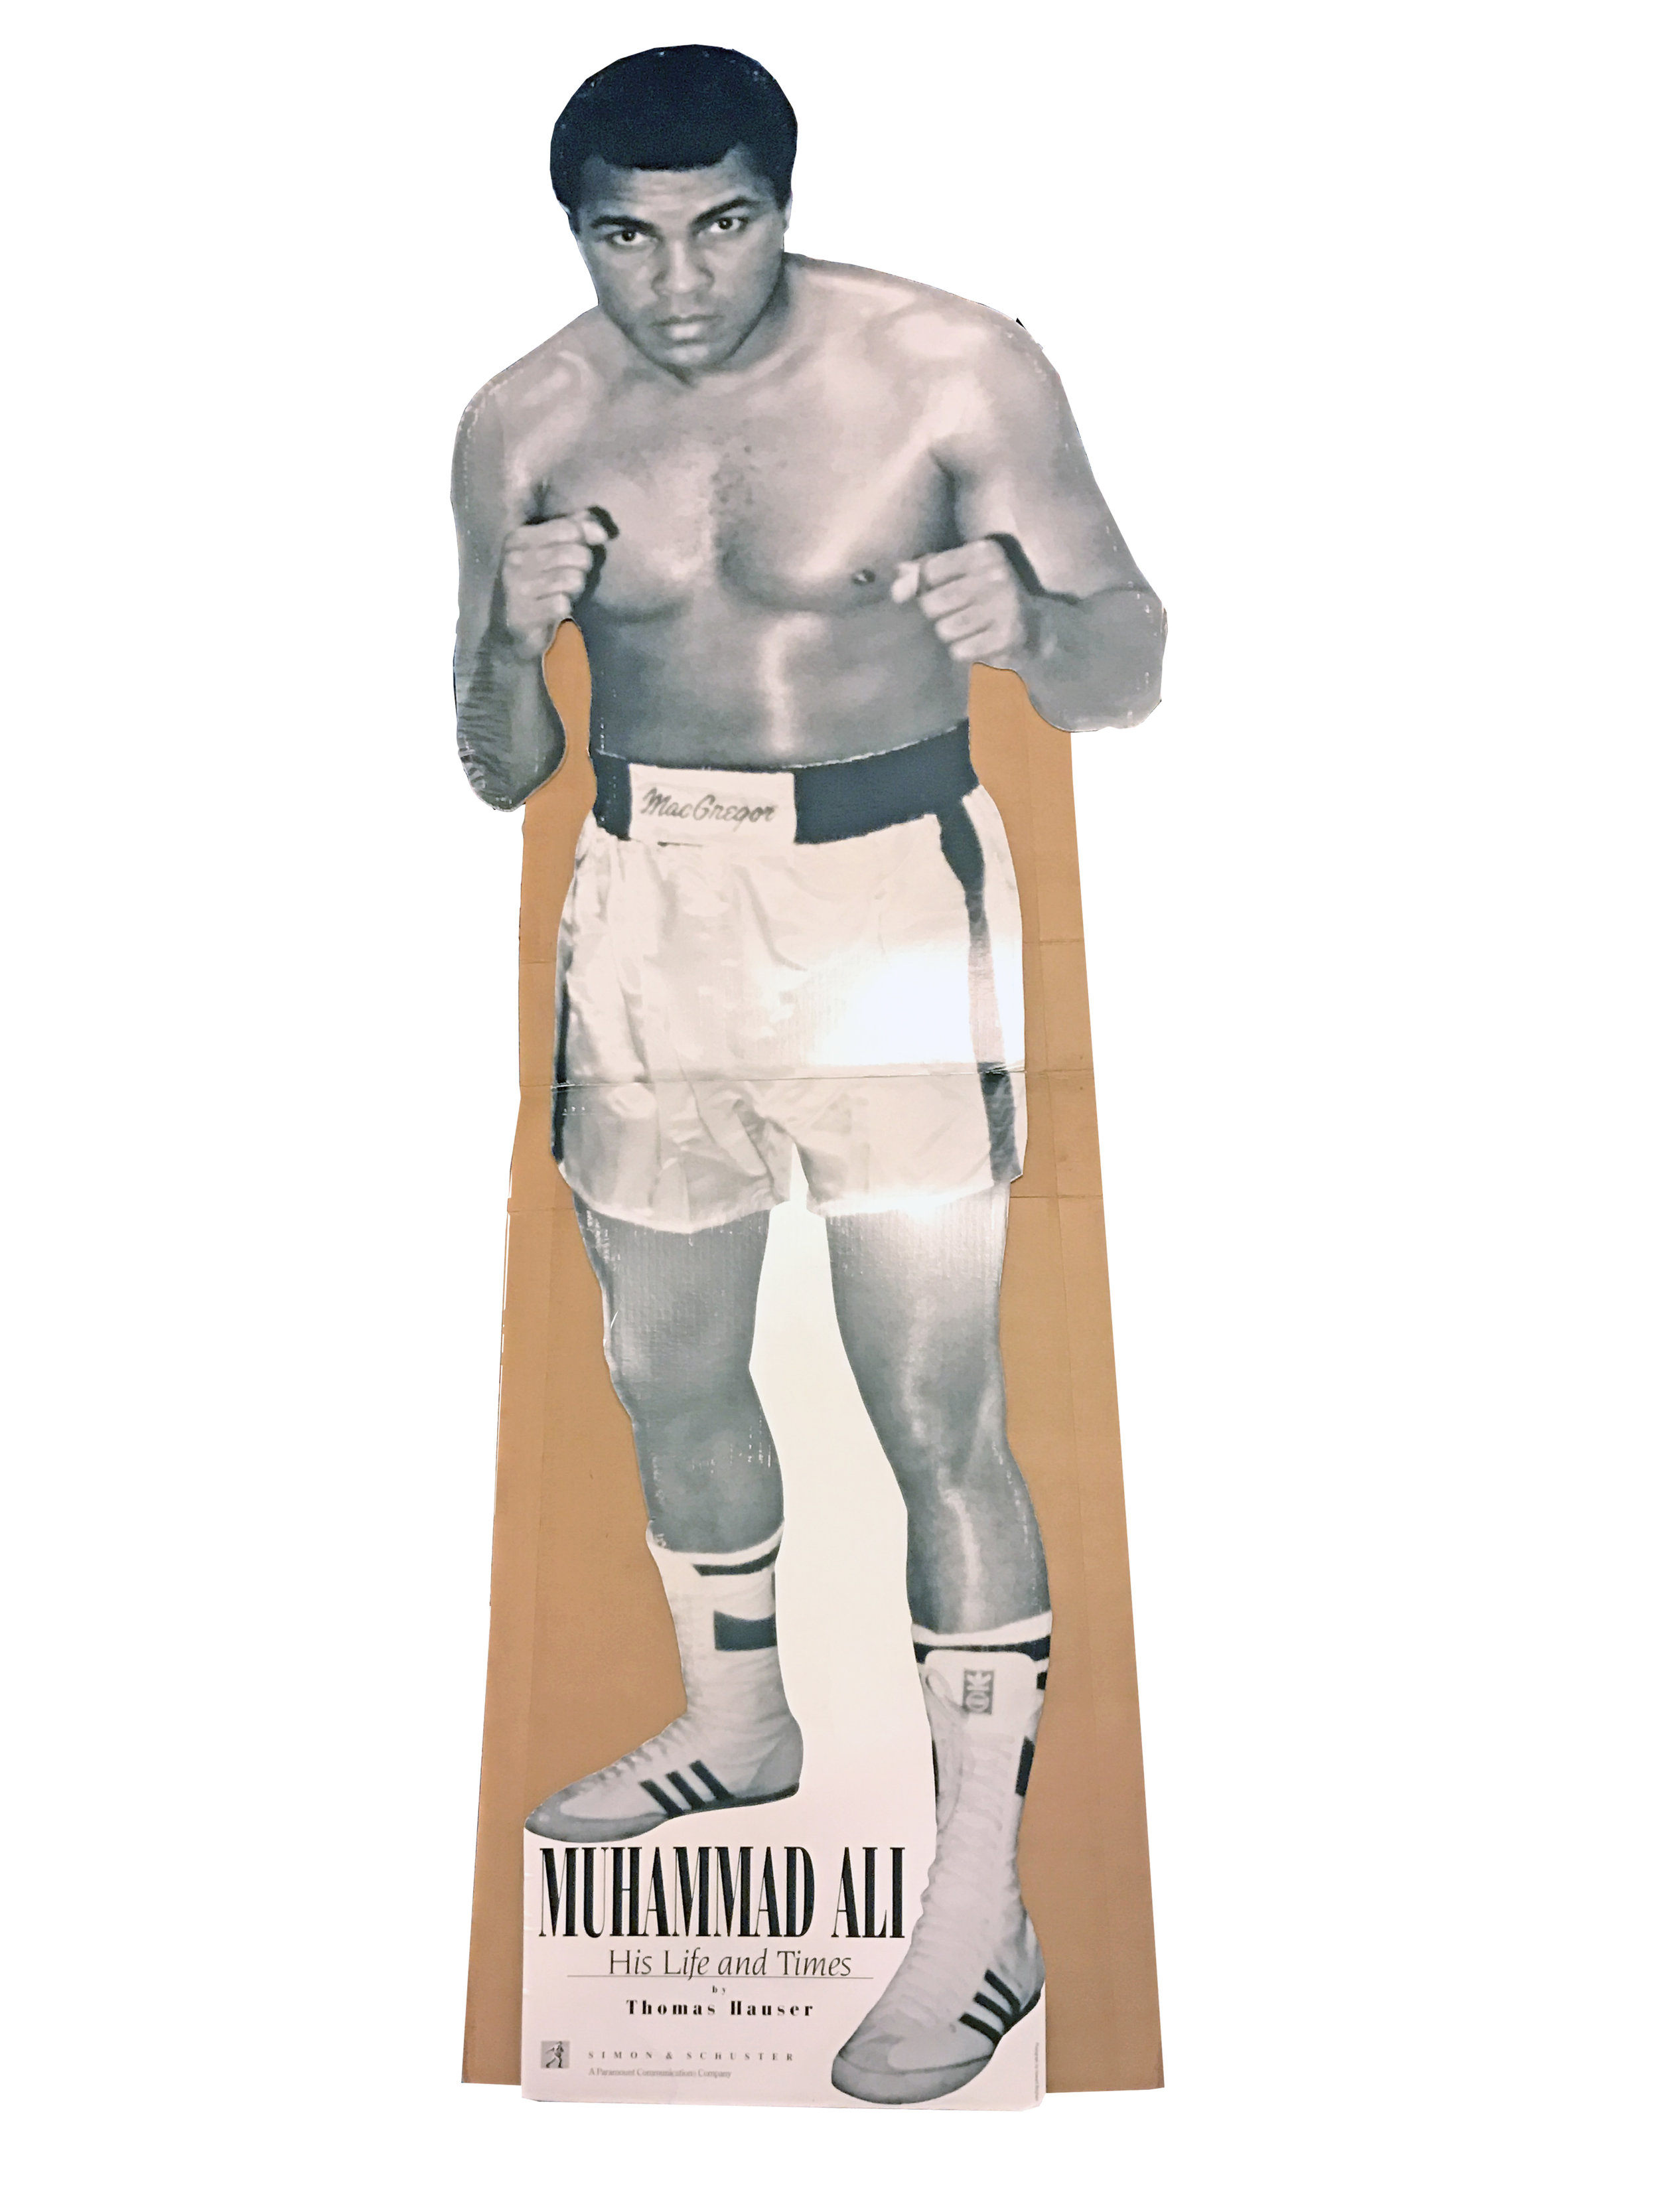 Gary Traugh - Boxing and Sports Memorabilia